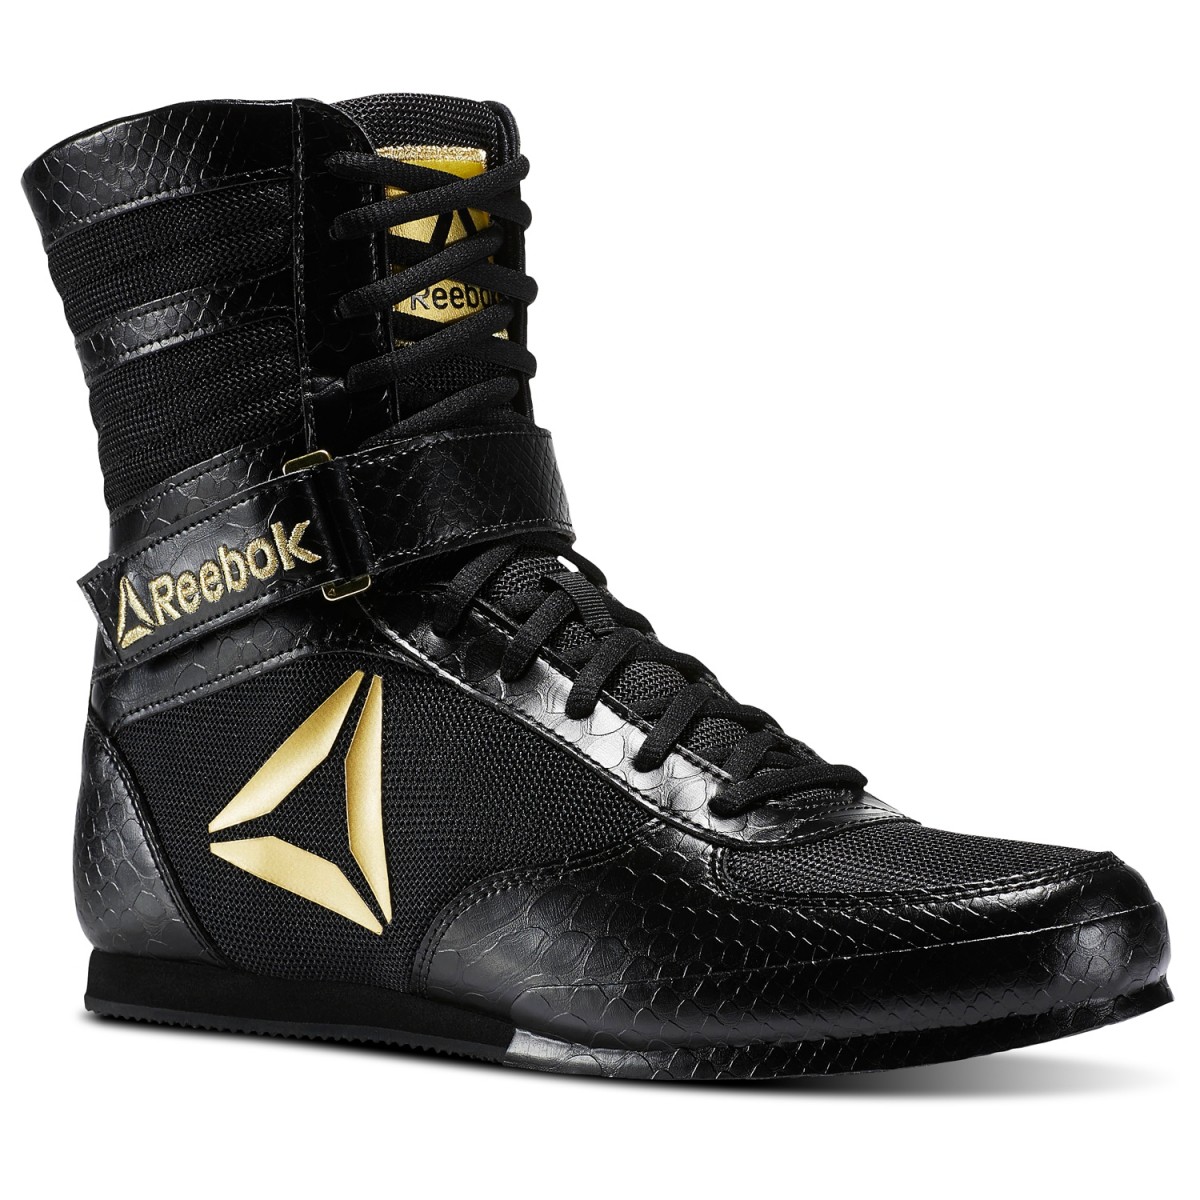 Reebok Renegade Pro Boxing Boots - Black/Gold